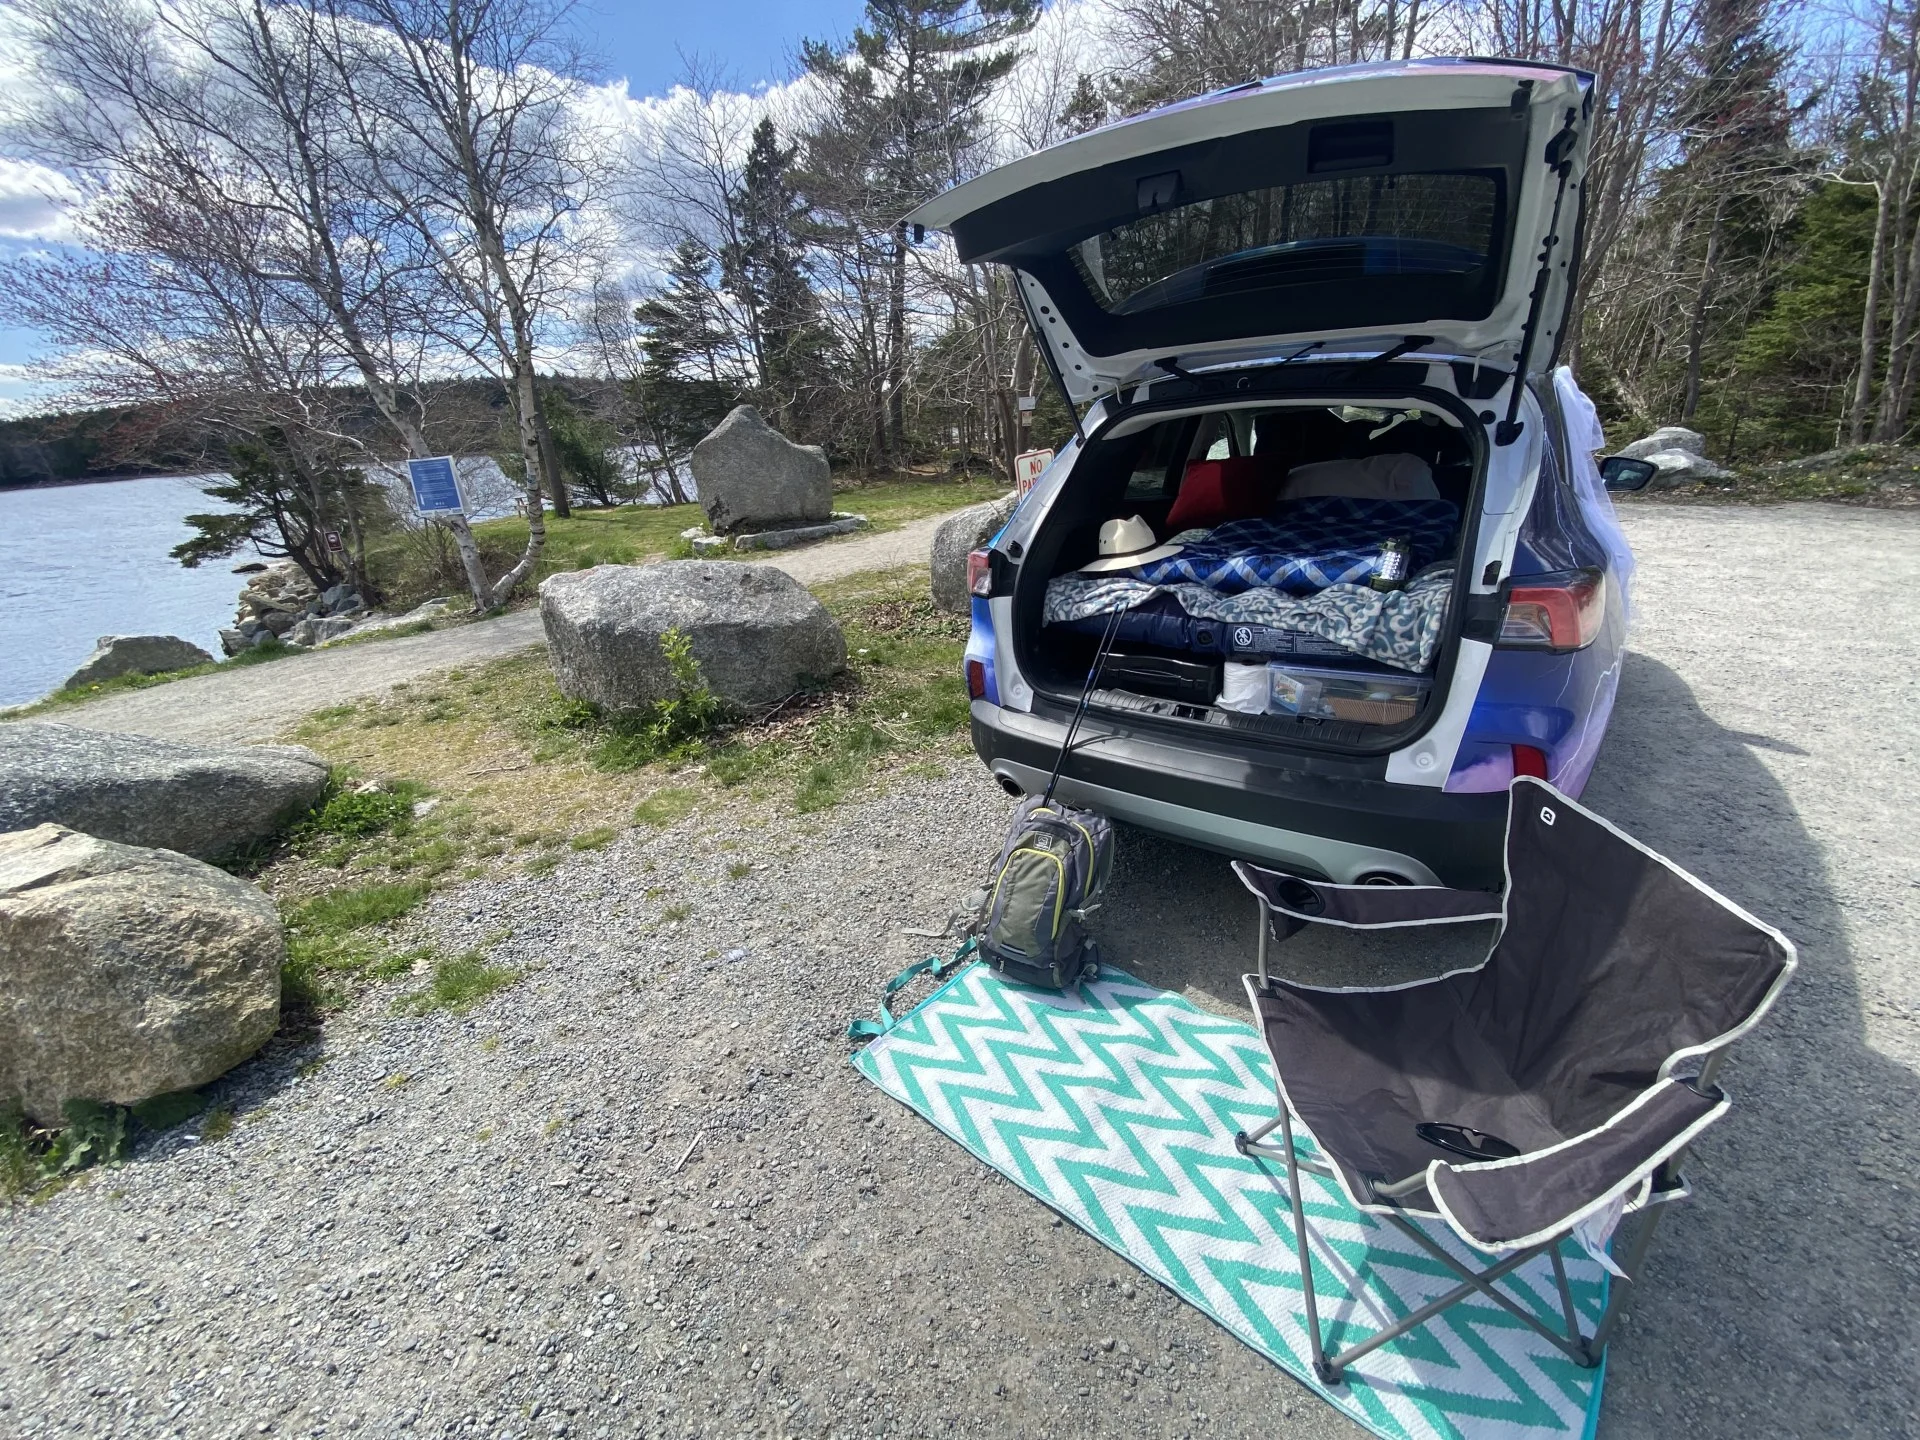 The secrets behind a successful car camping trip